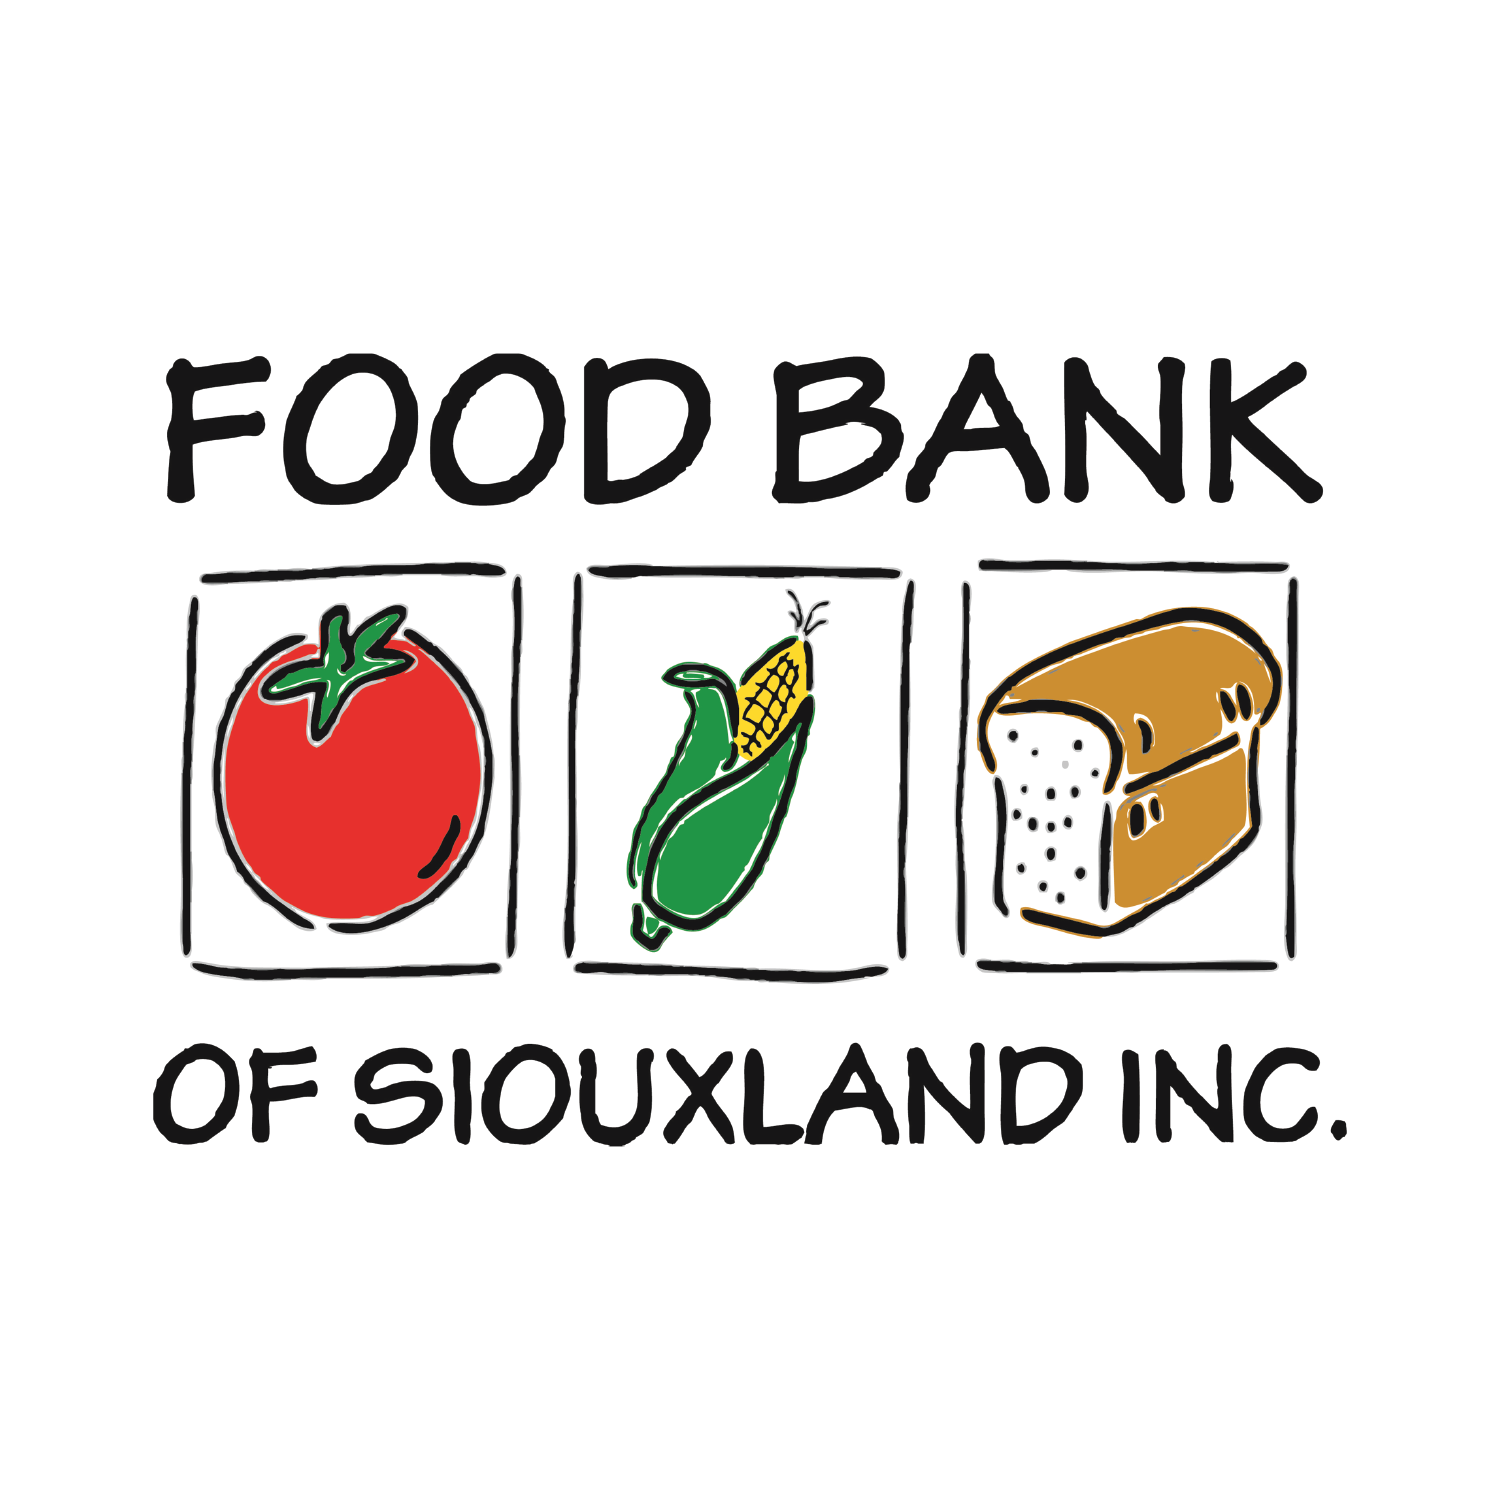 Food Bank of Siouxland